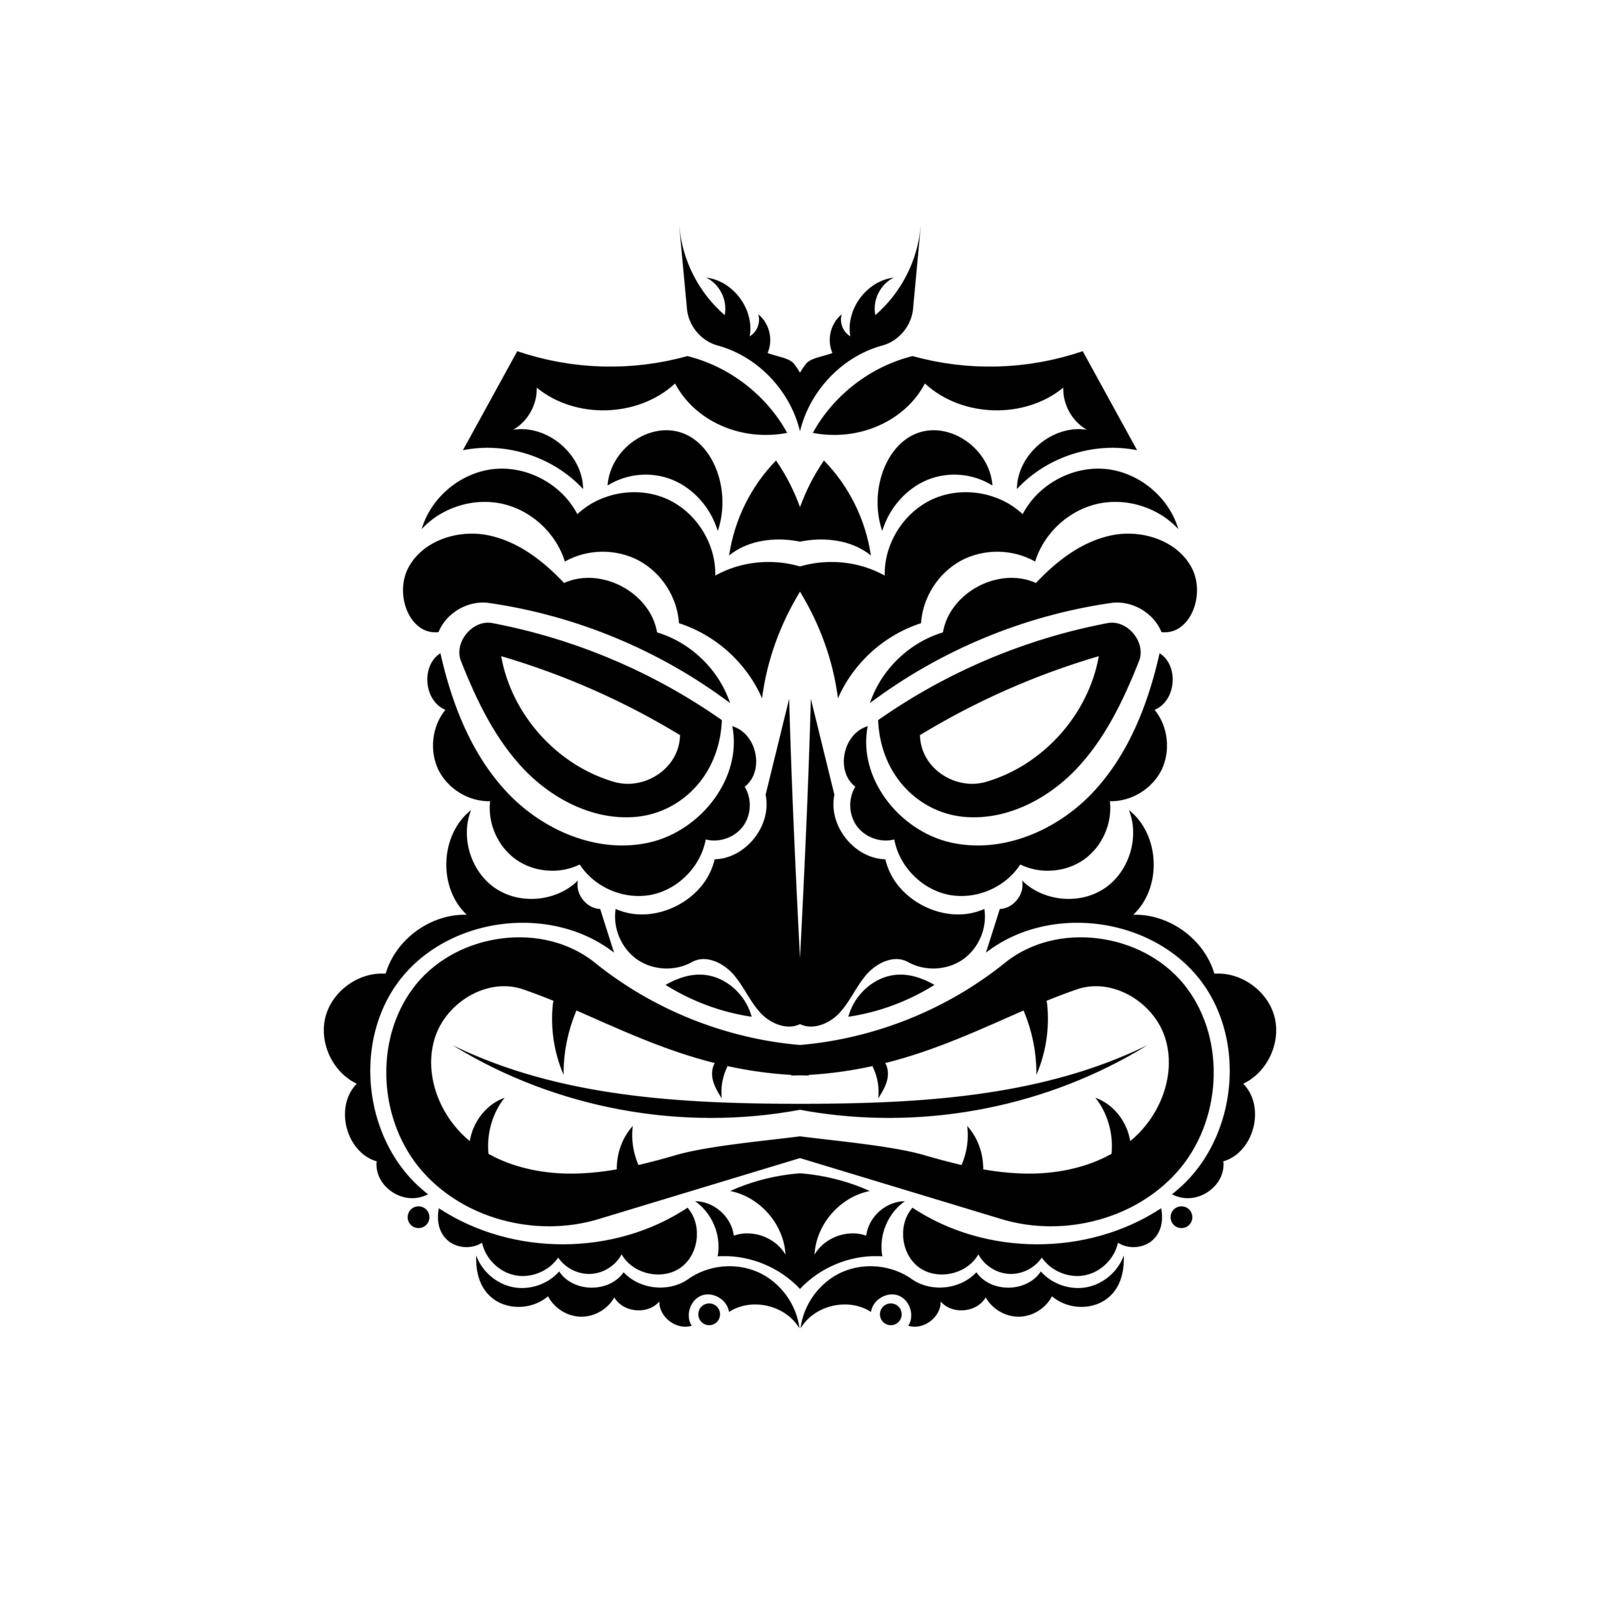 Samoan style mask. Polynesian style tattoo or print. Vector by Javvani